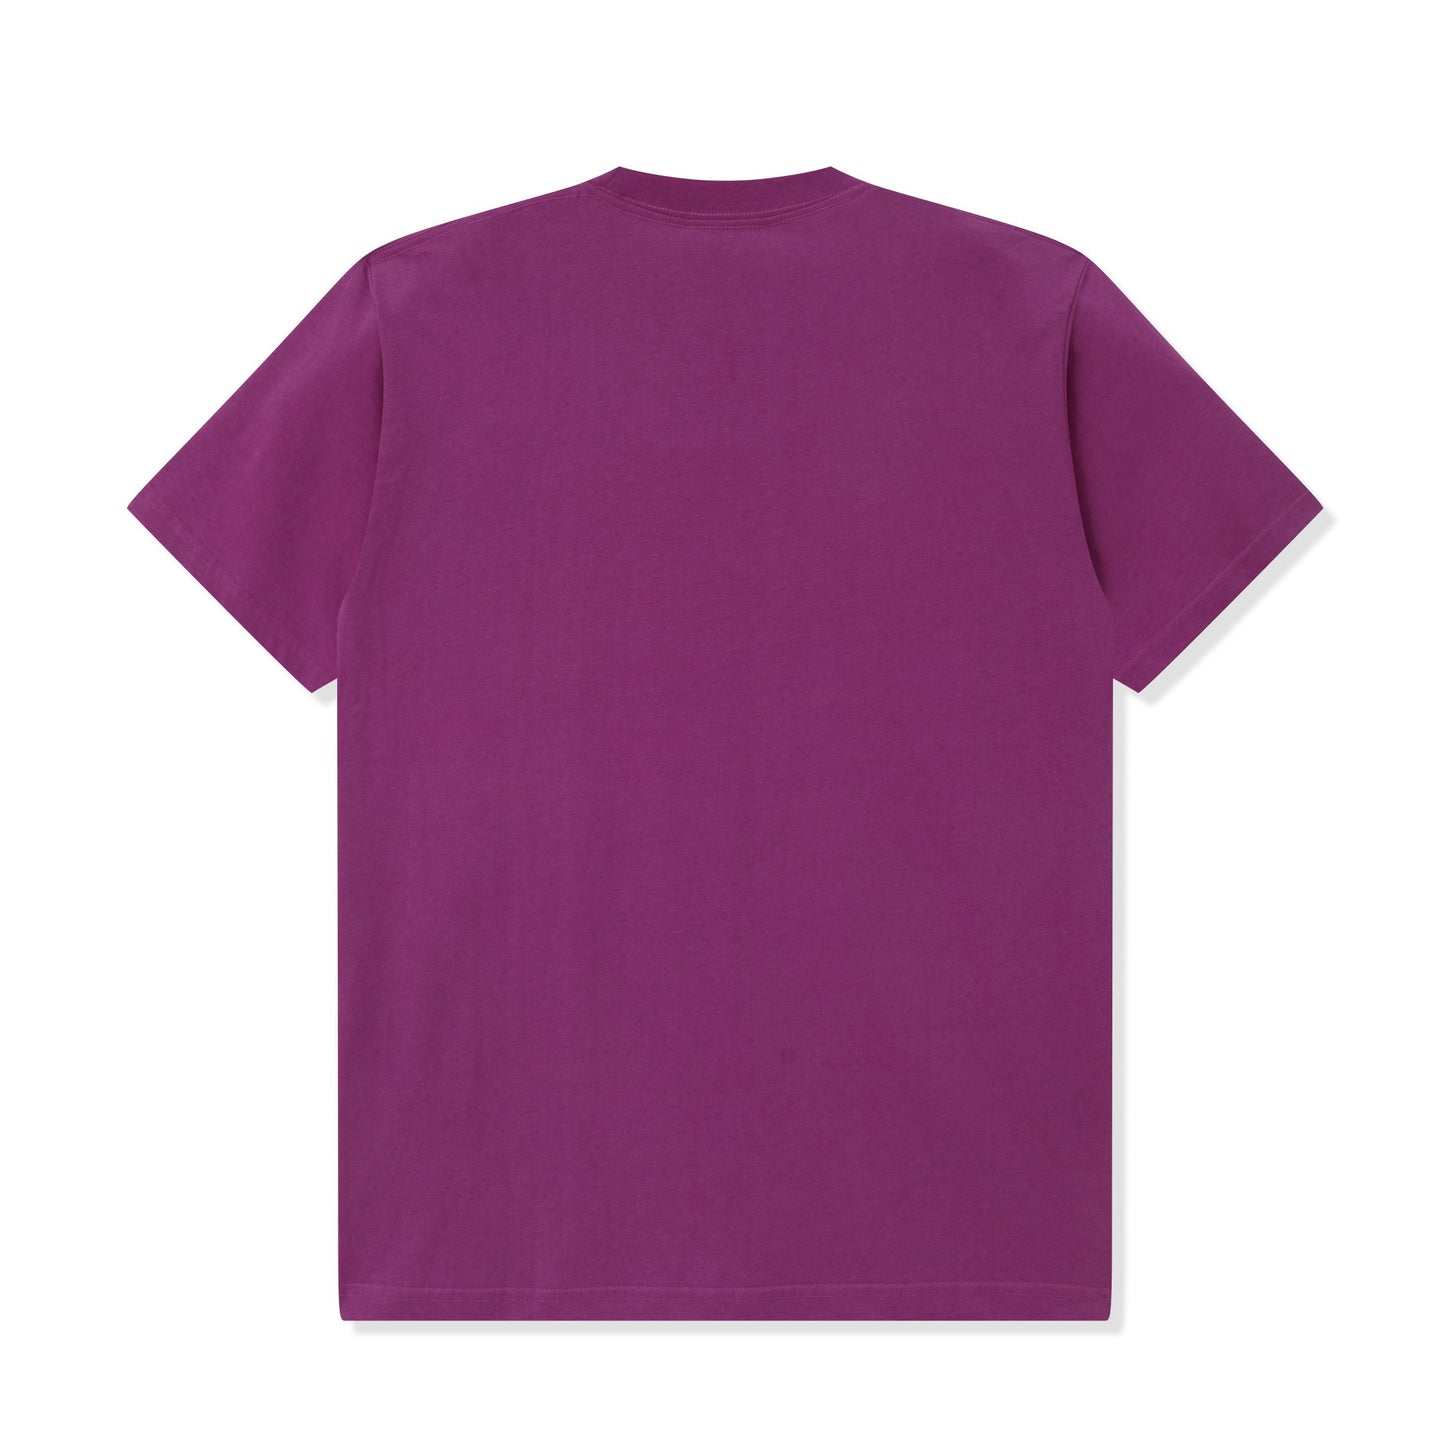 Black,White,Brown and Purple T-shirt